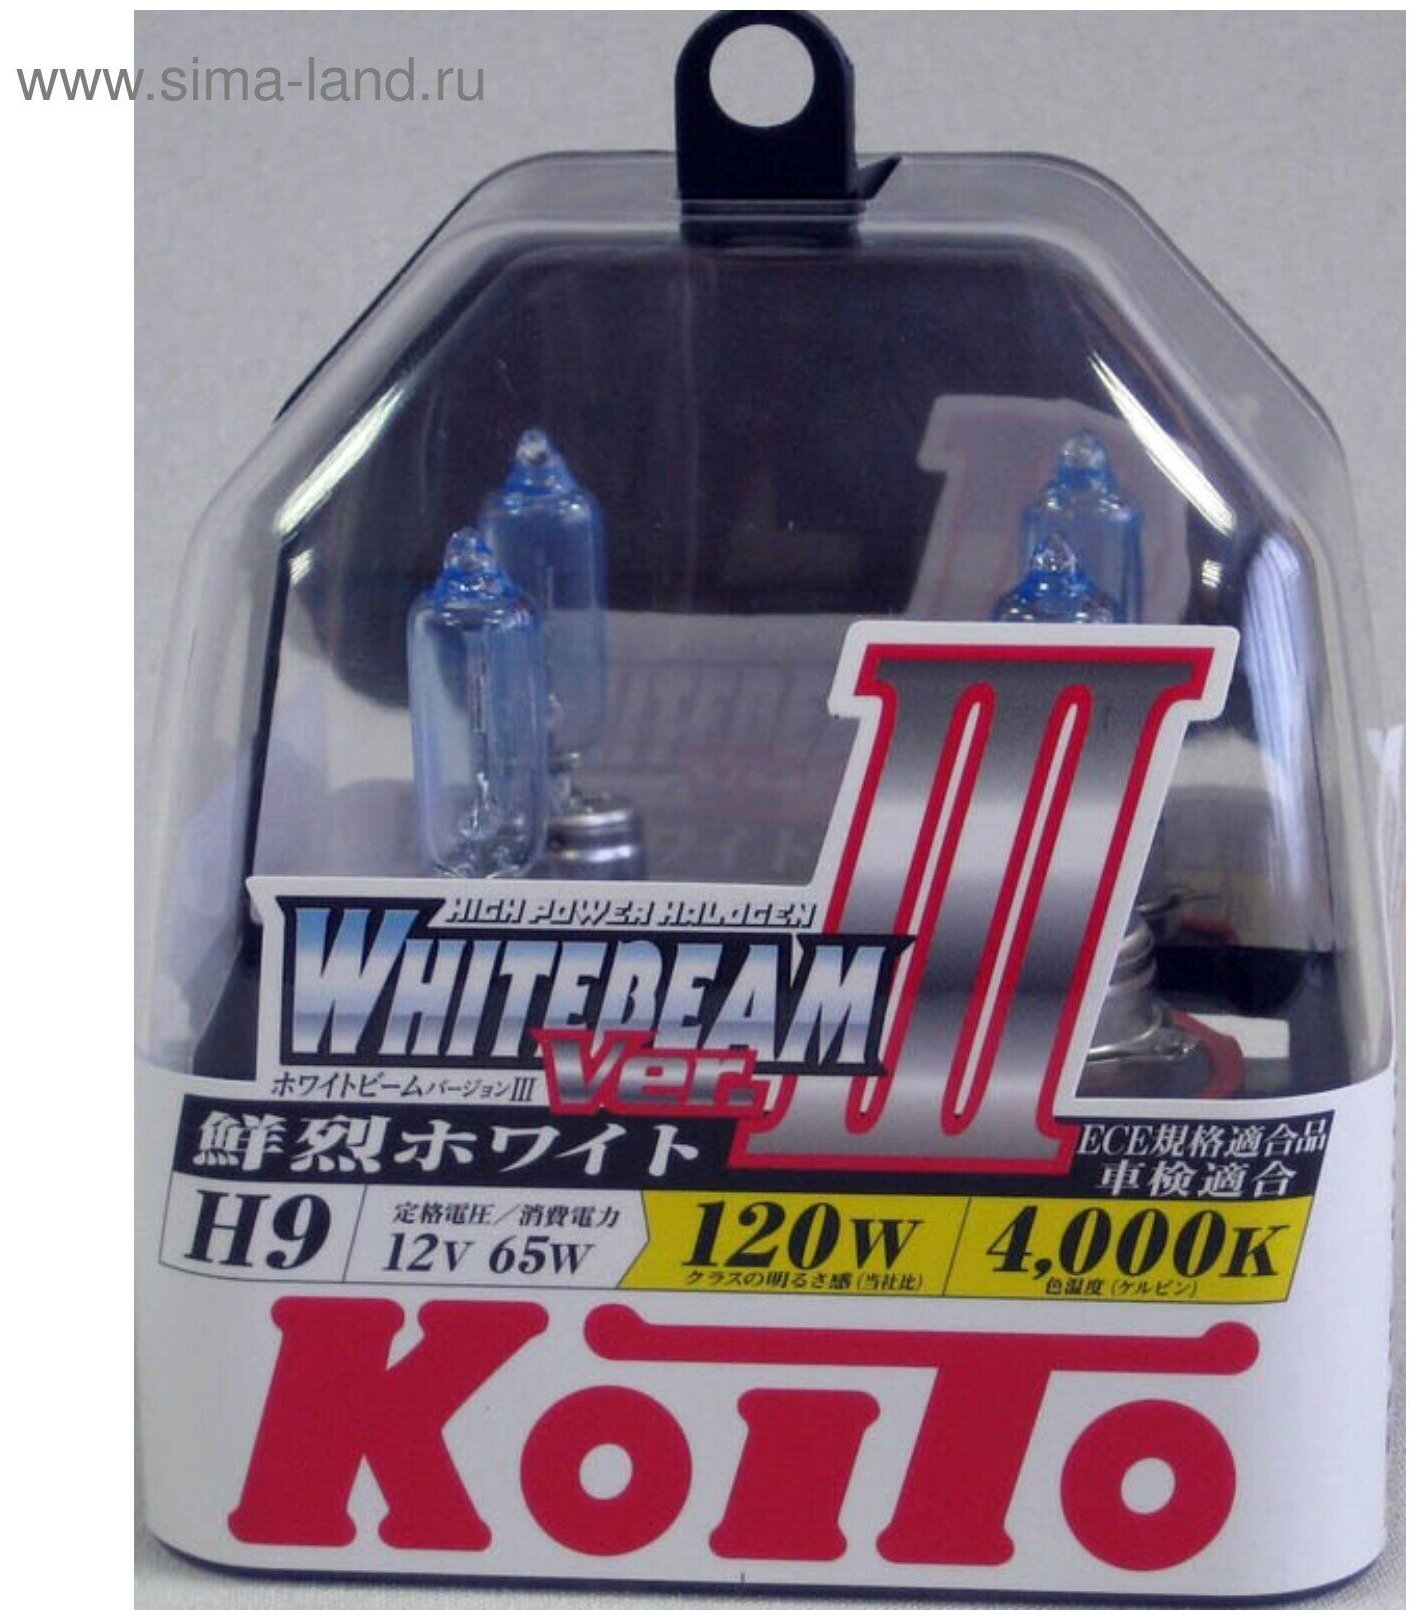 Лампа Автомобильная H9 12V-65W (Pgj19-5) Whitebeam (120W) (Уп.2шт.) (Koito) KOITO арт. P0759W